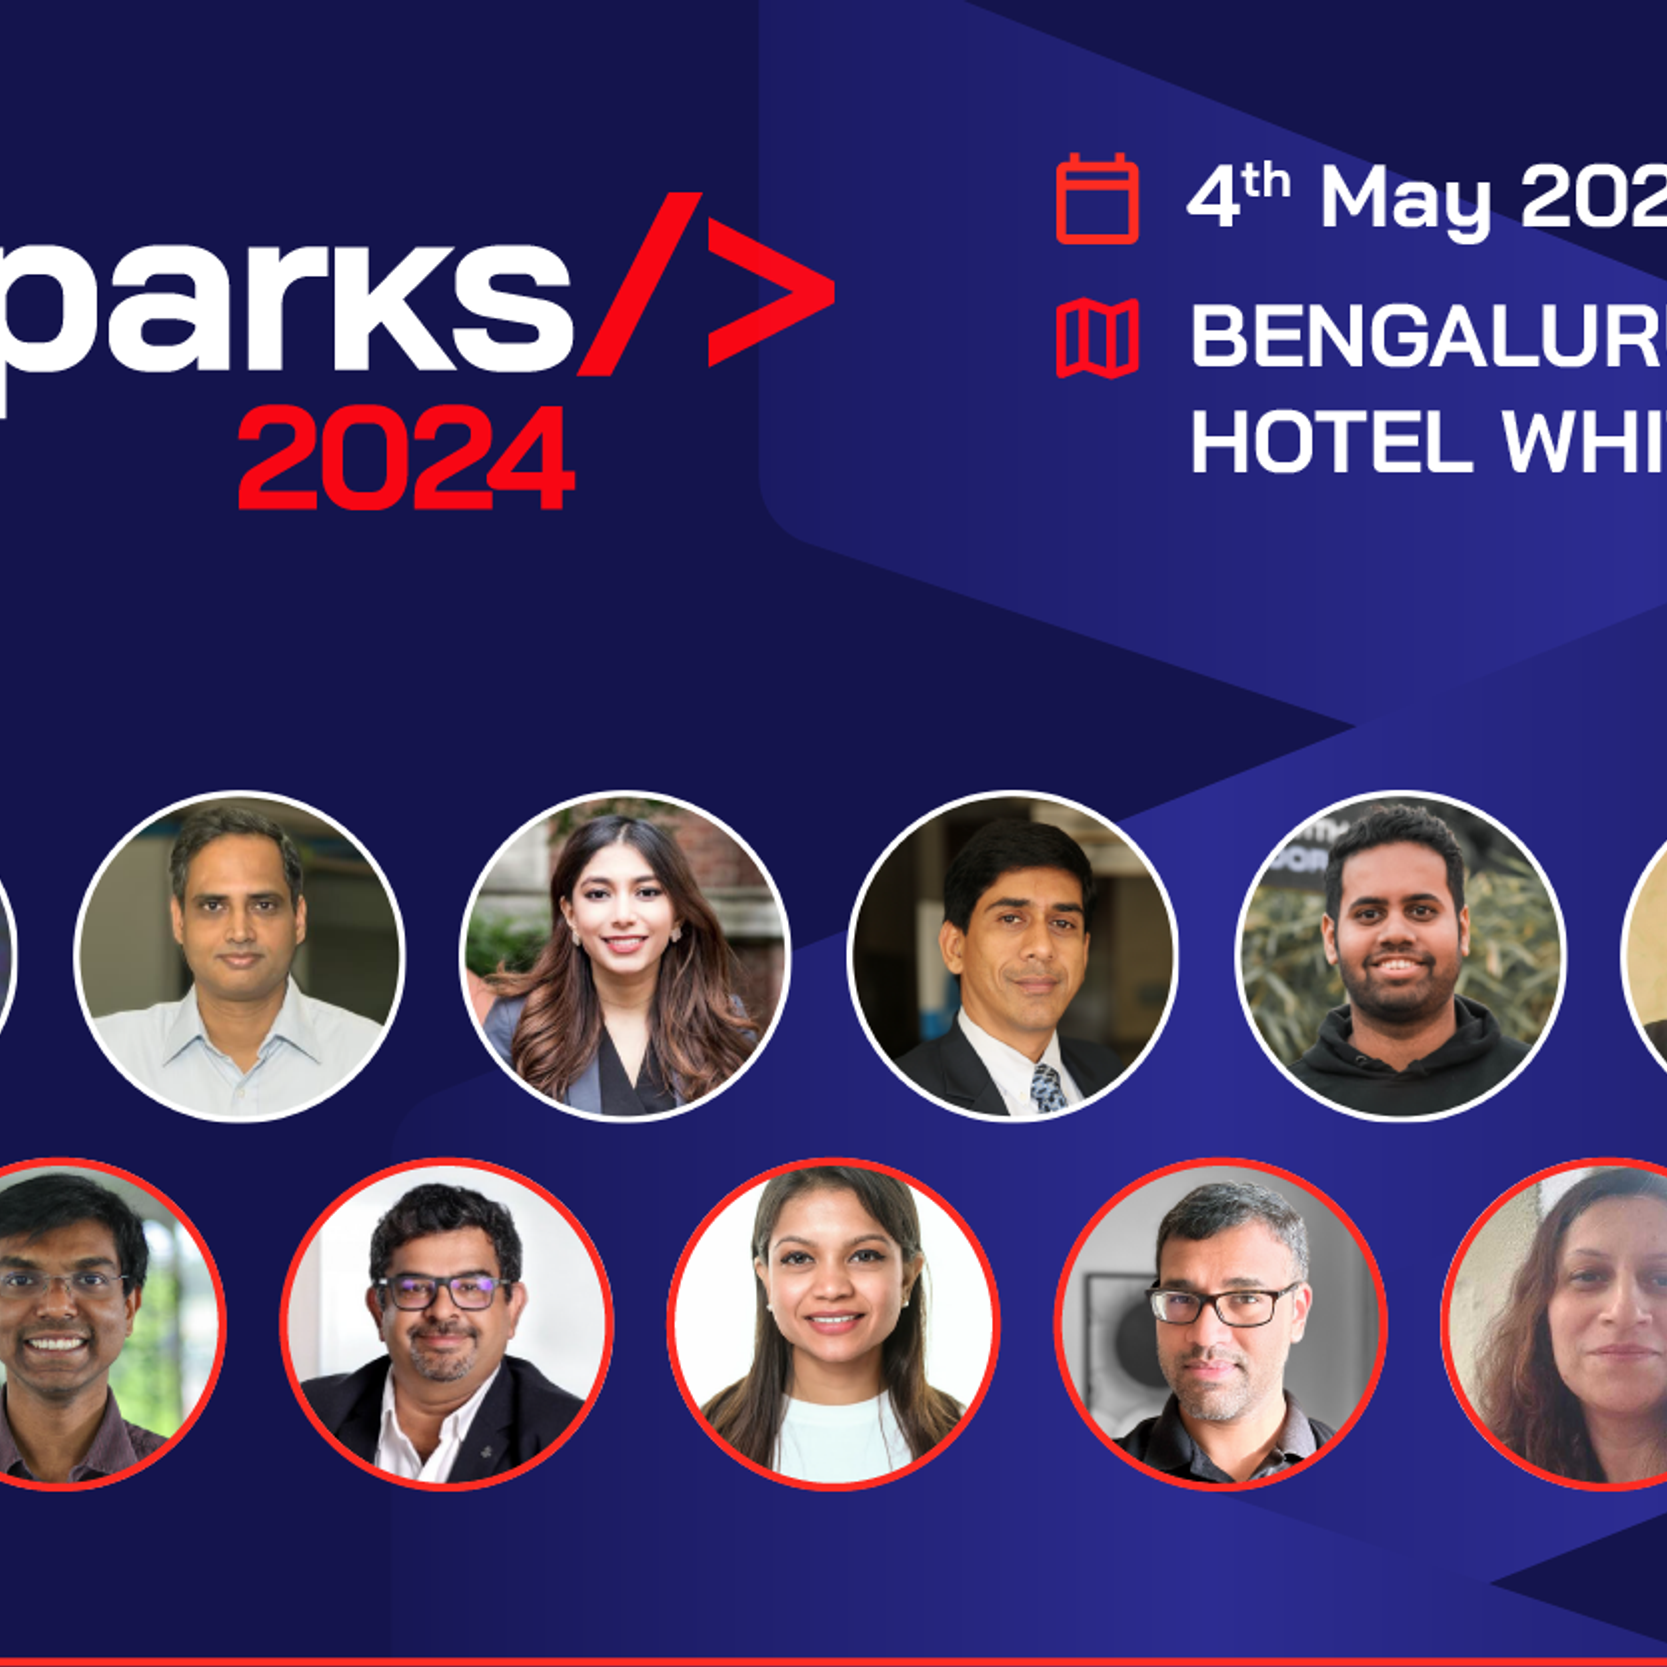 Sneak peek: Meet the disruptors powering India's tech revolution, only at DevSparks 2024